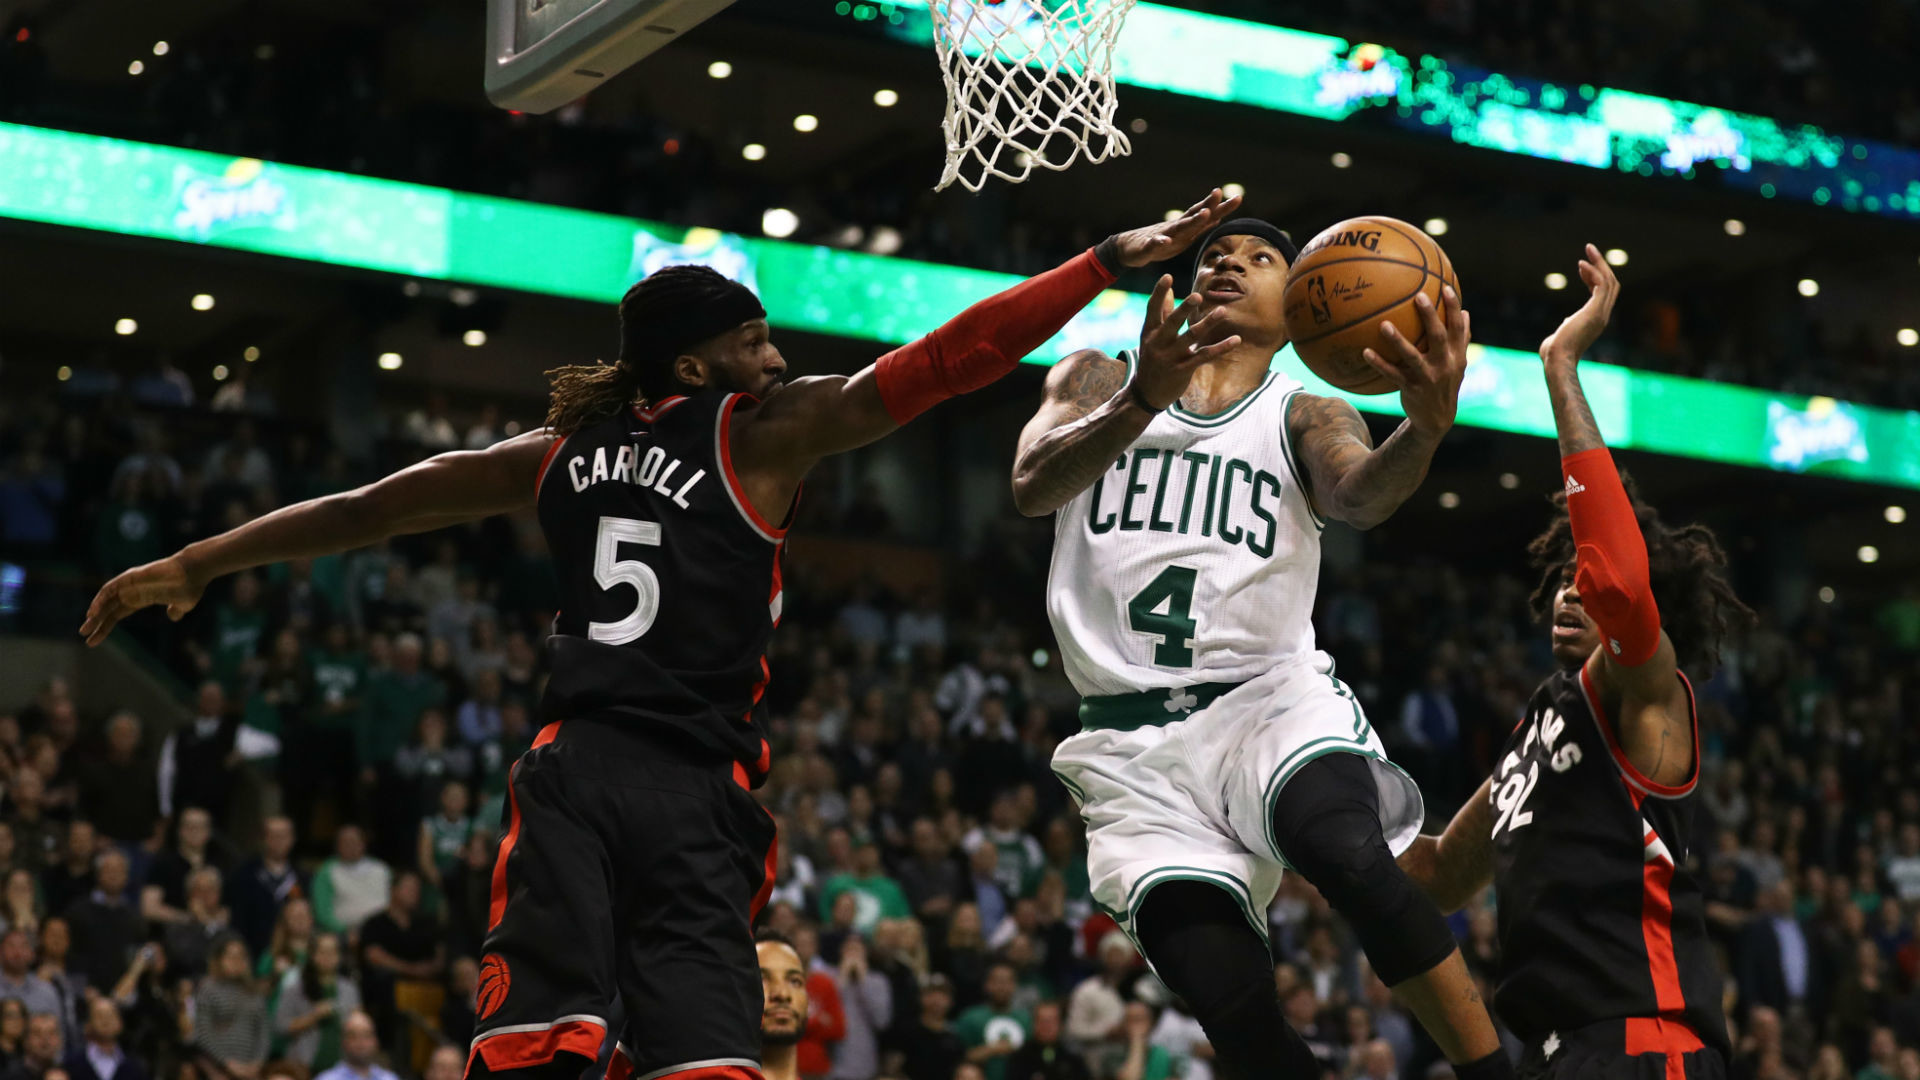 1920x1080 Celtics' Isaiah Thomas already an MVP trash talker | NBA | Sporting News